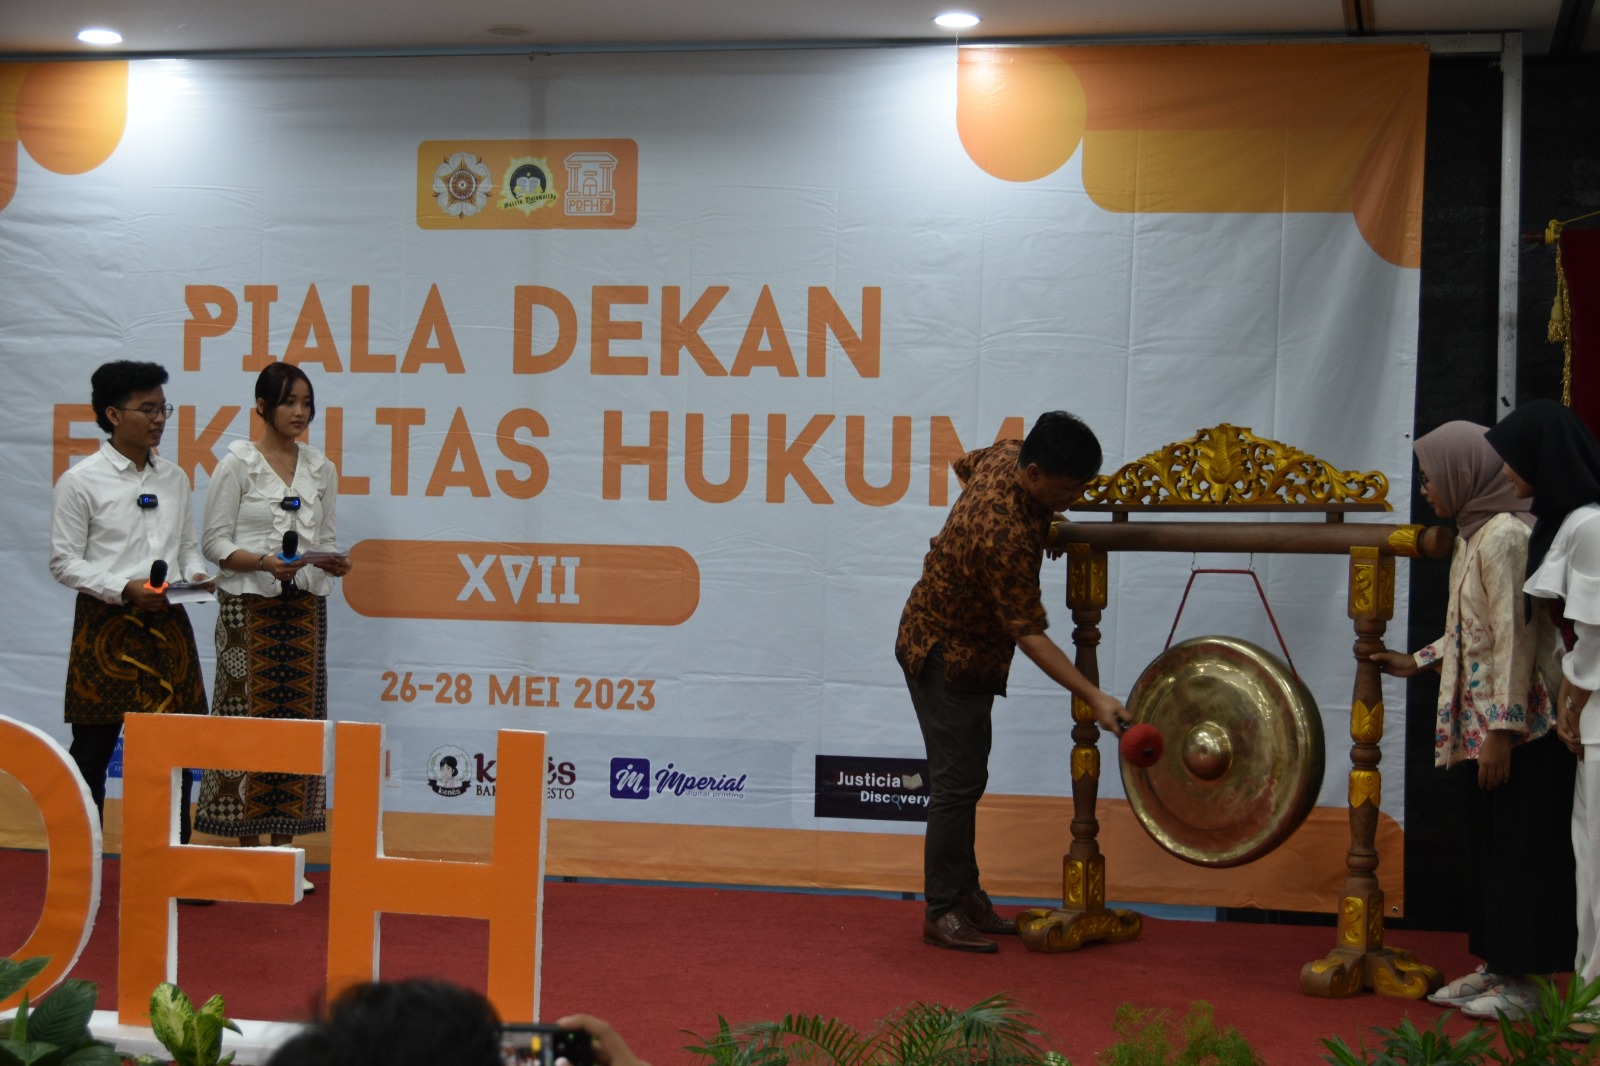 Ketua Pengadilan Negeri Yogyakarta Menghadiri Opening Ceremony Piala Dekan Fakultas Hukum XVII UGM